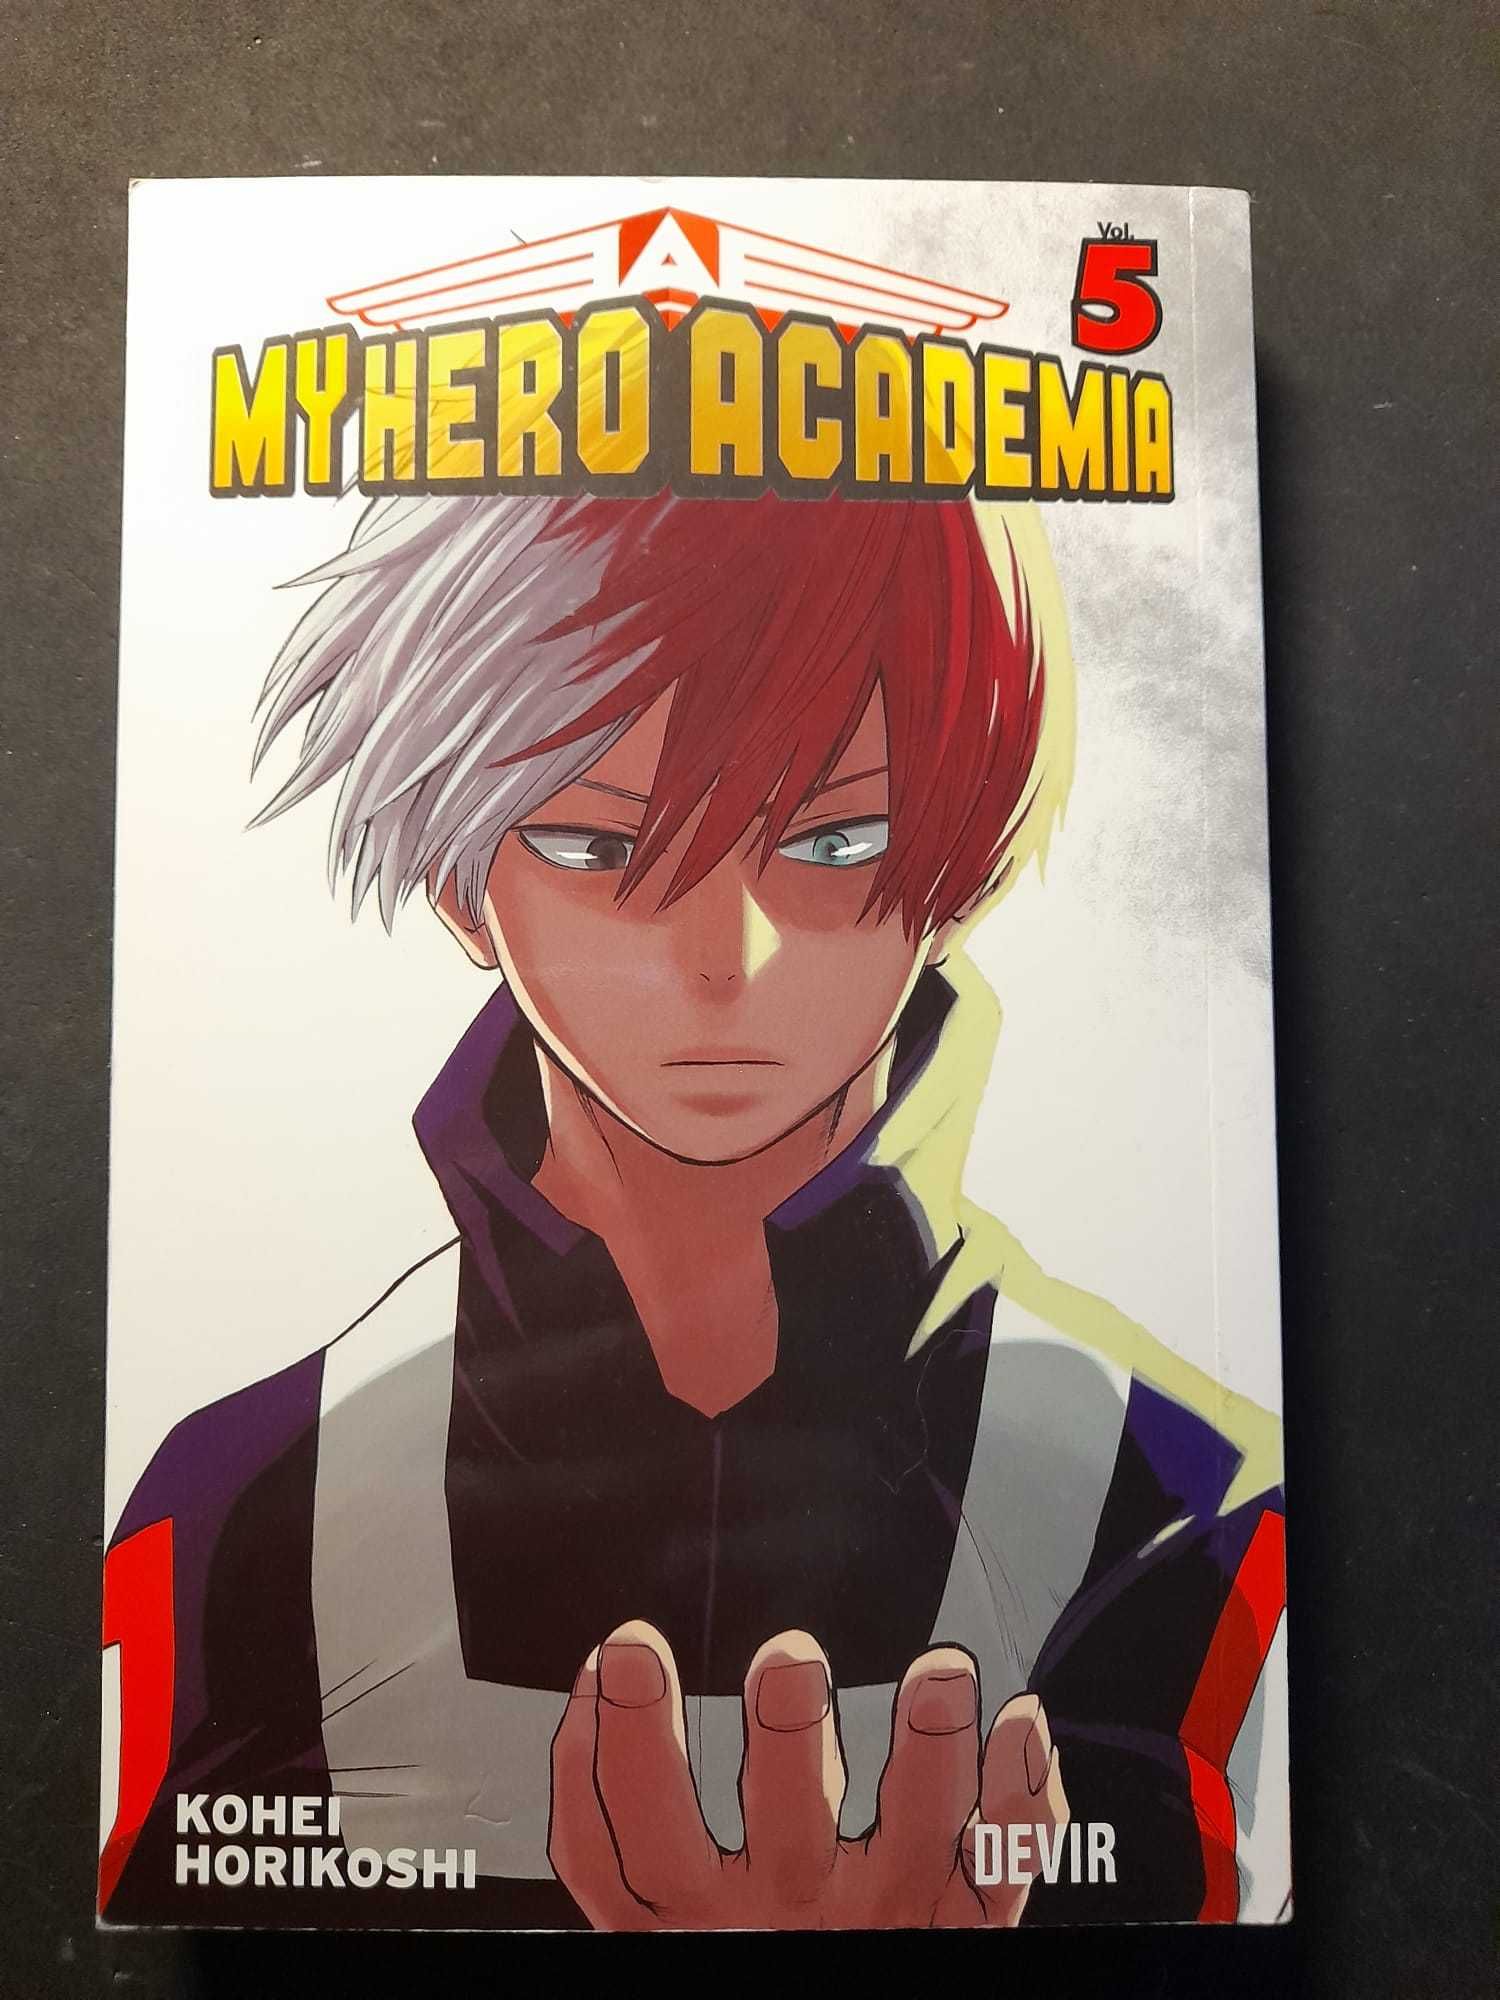 My Hero Academia - Manga